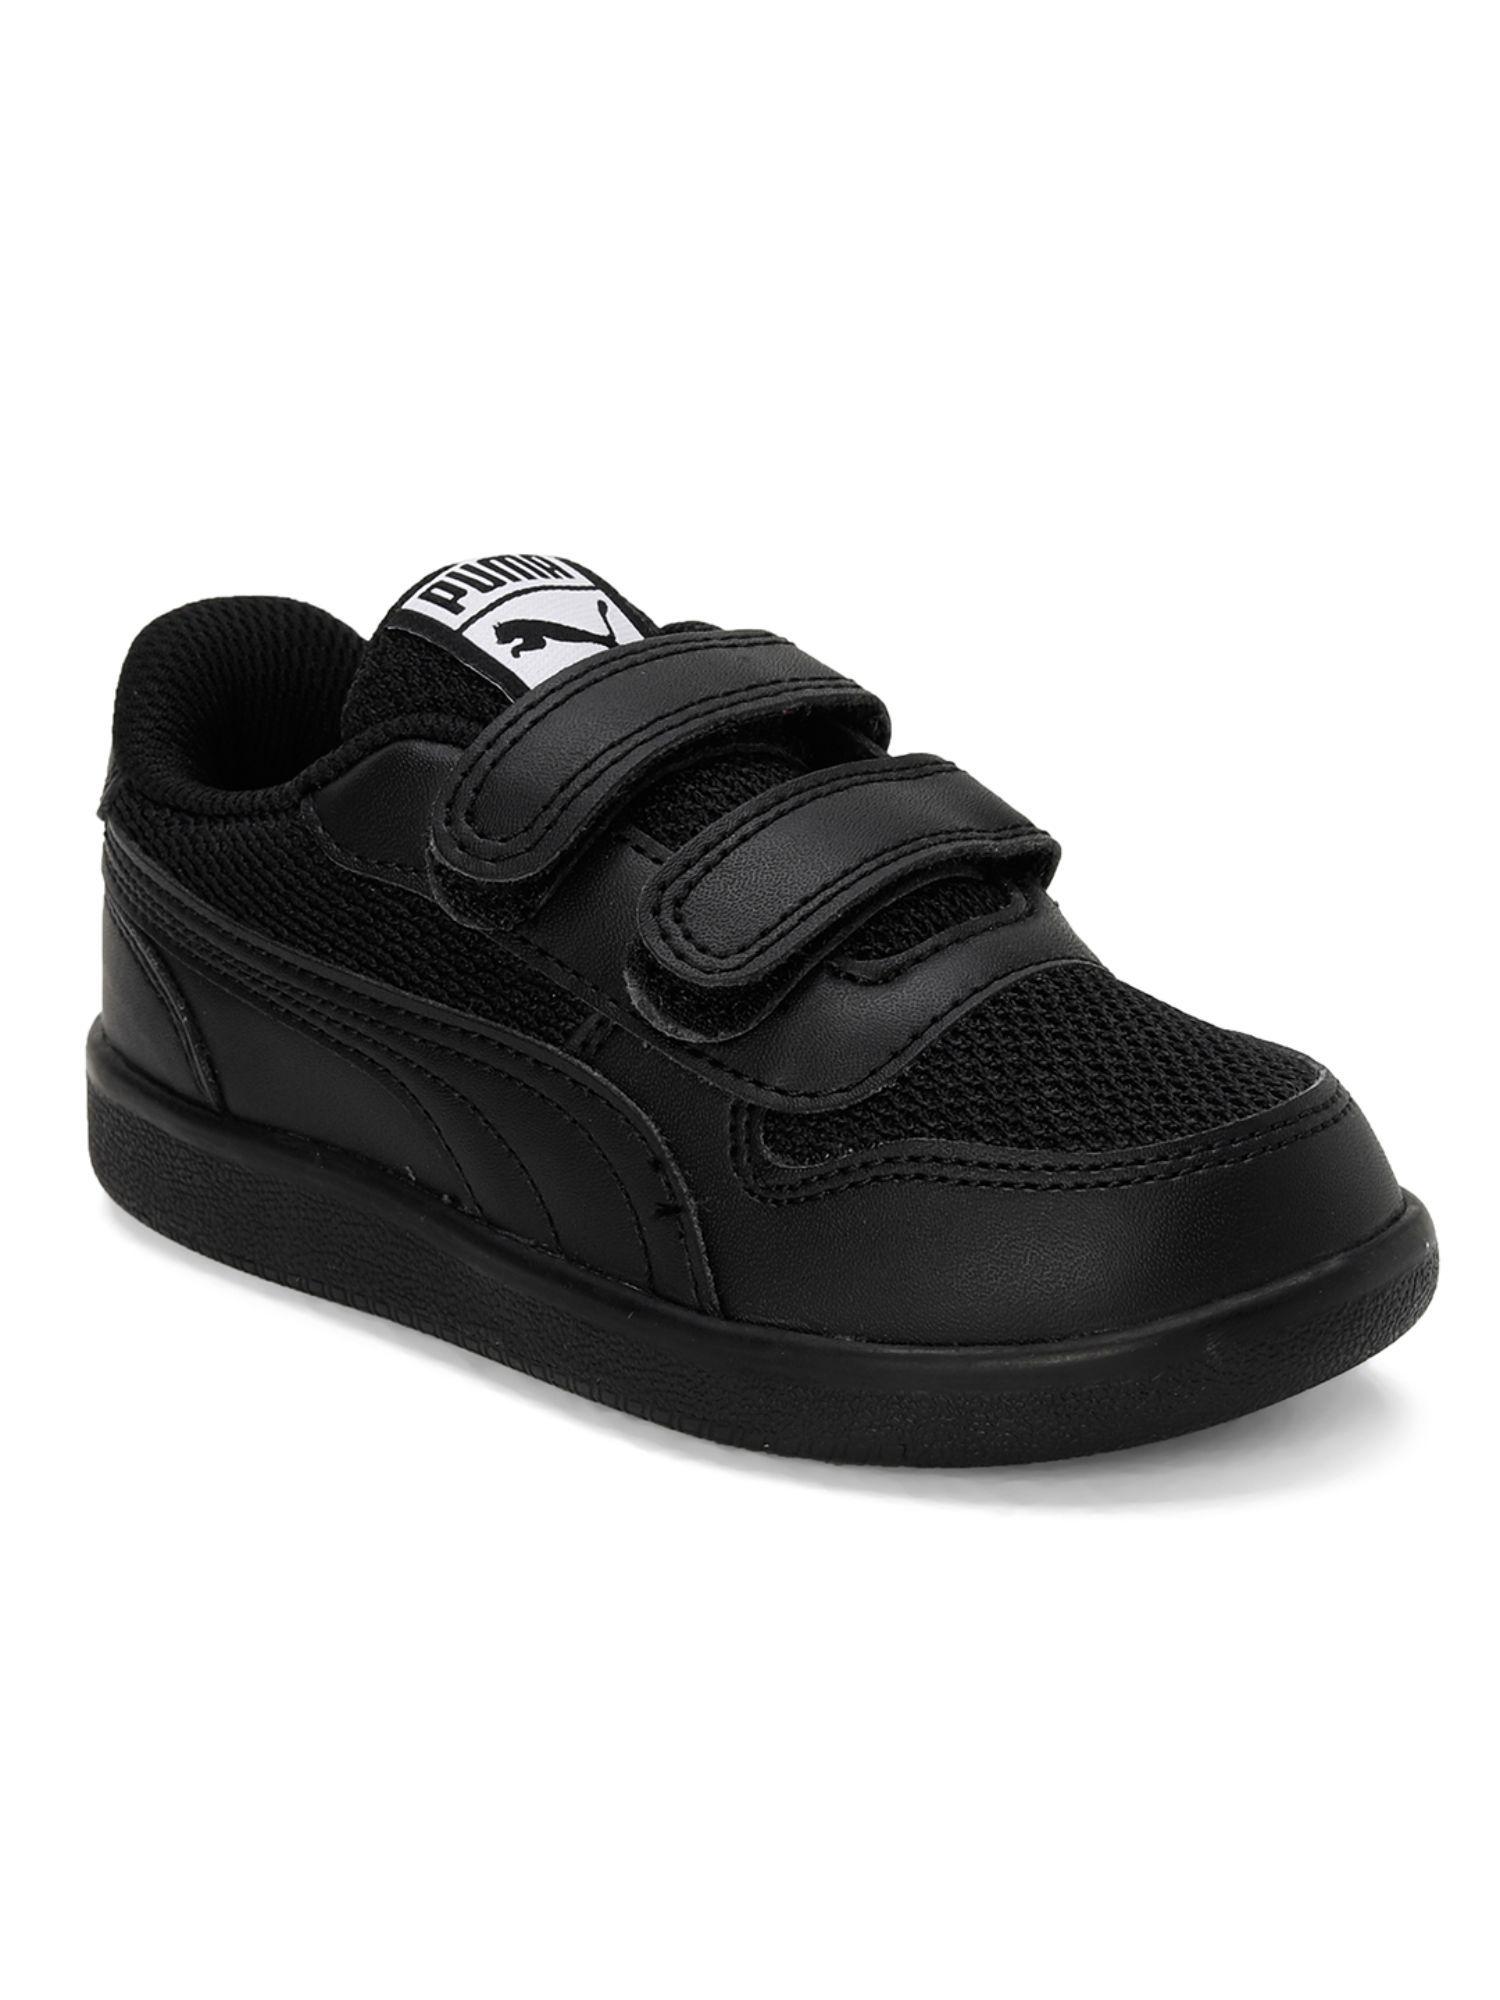 punch comfort infant kids black casual shoes